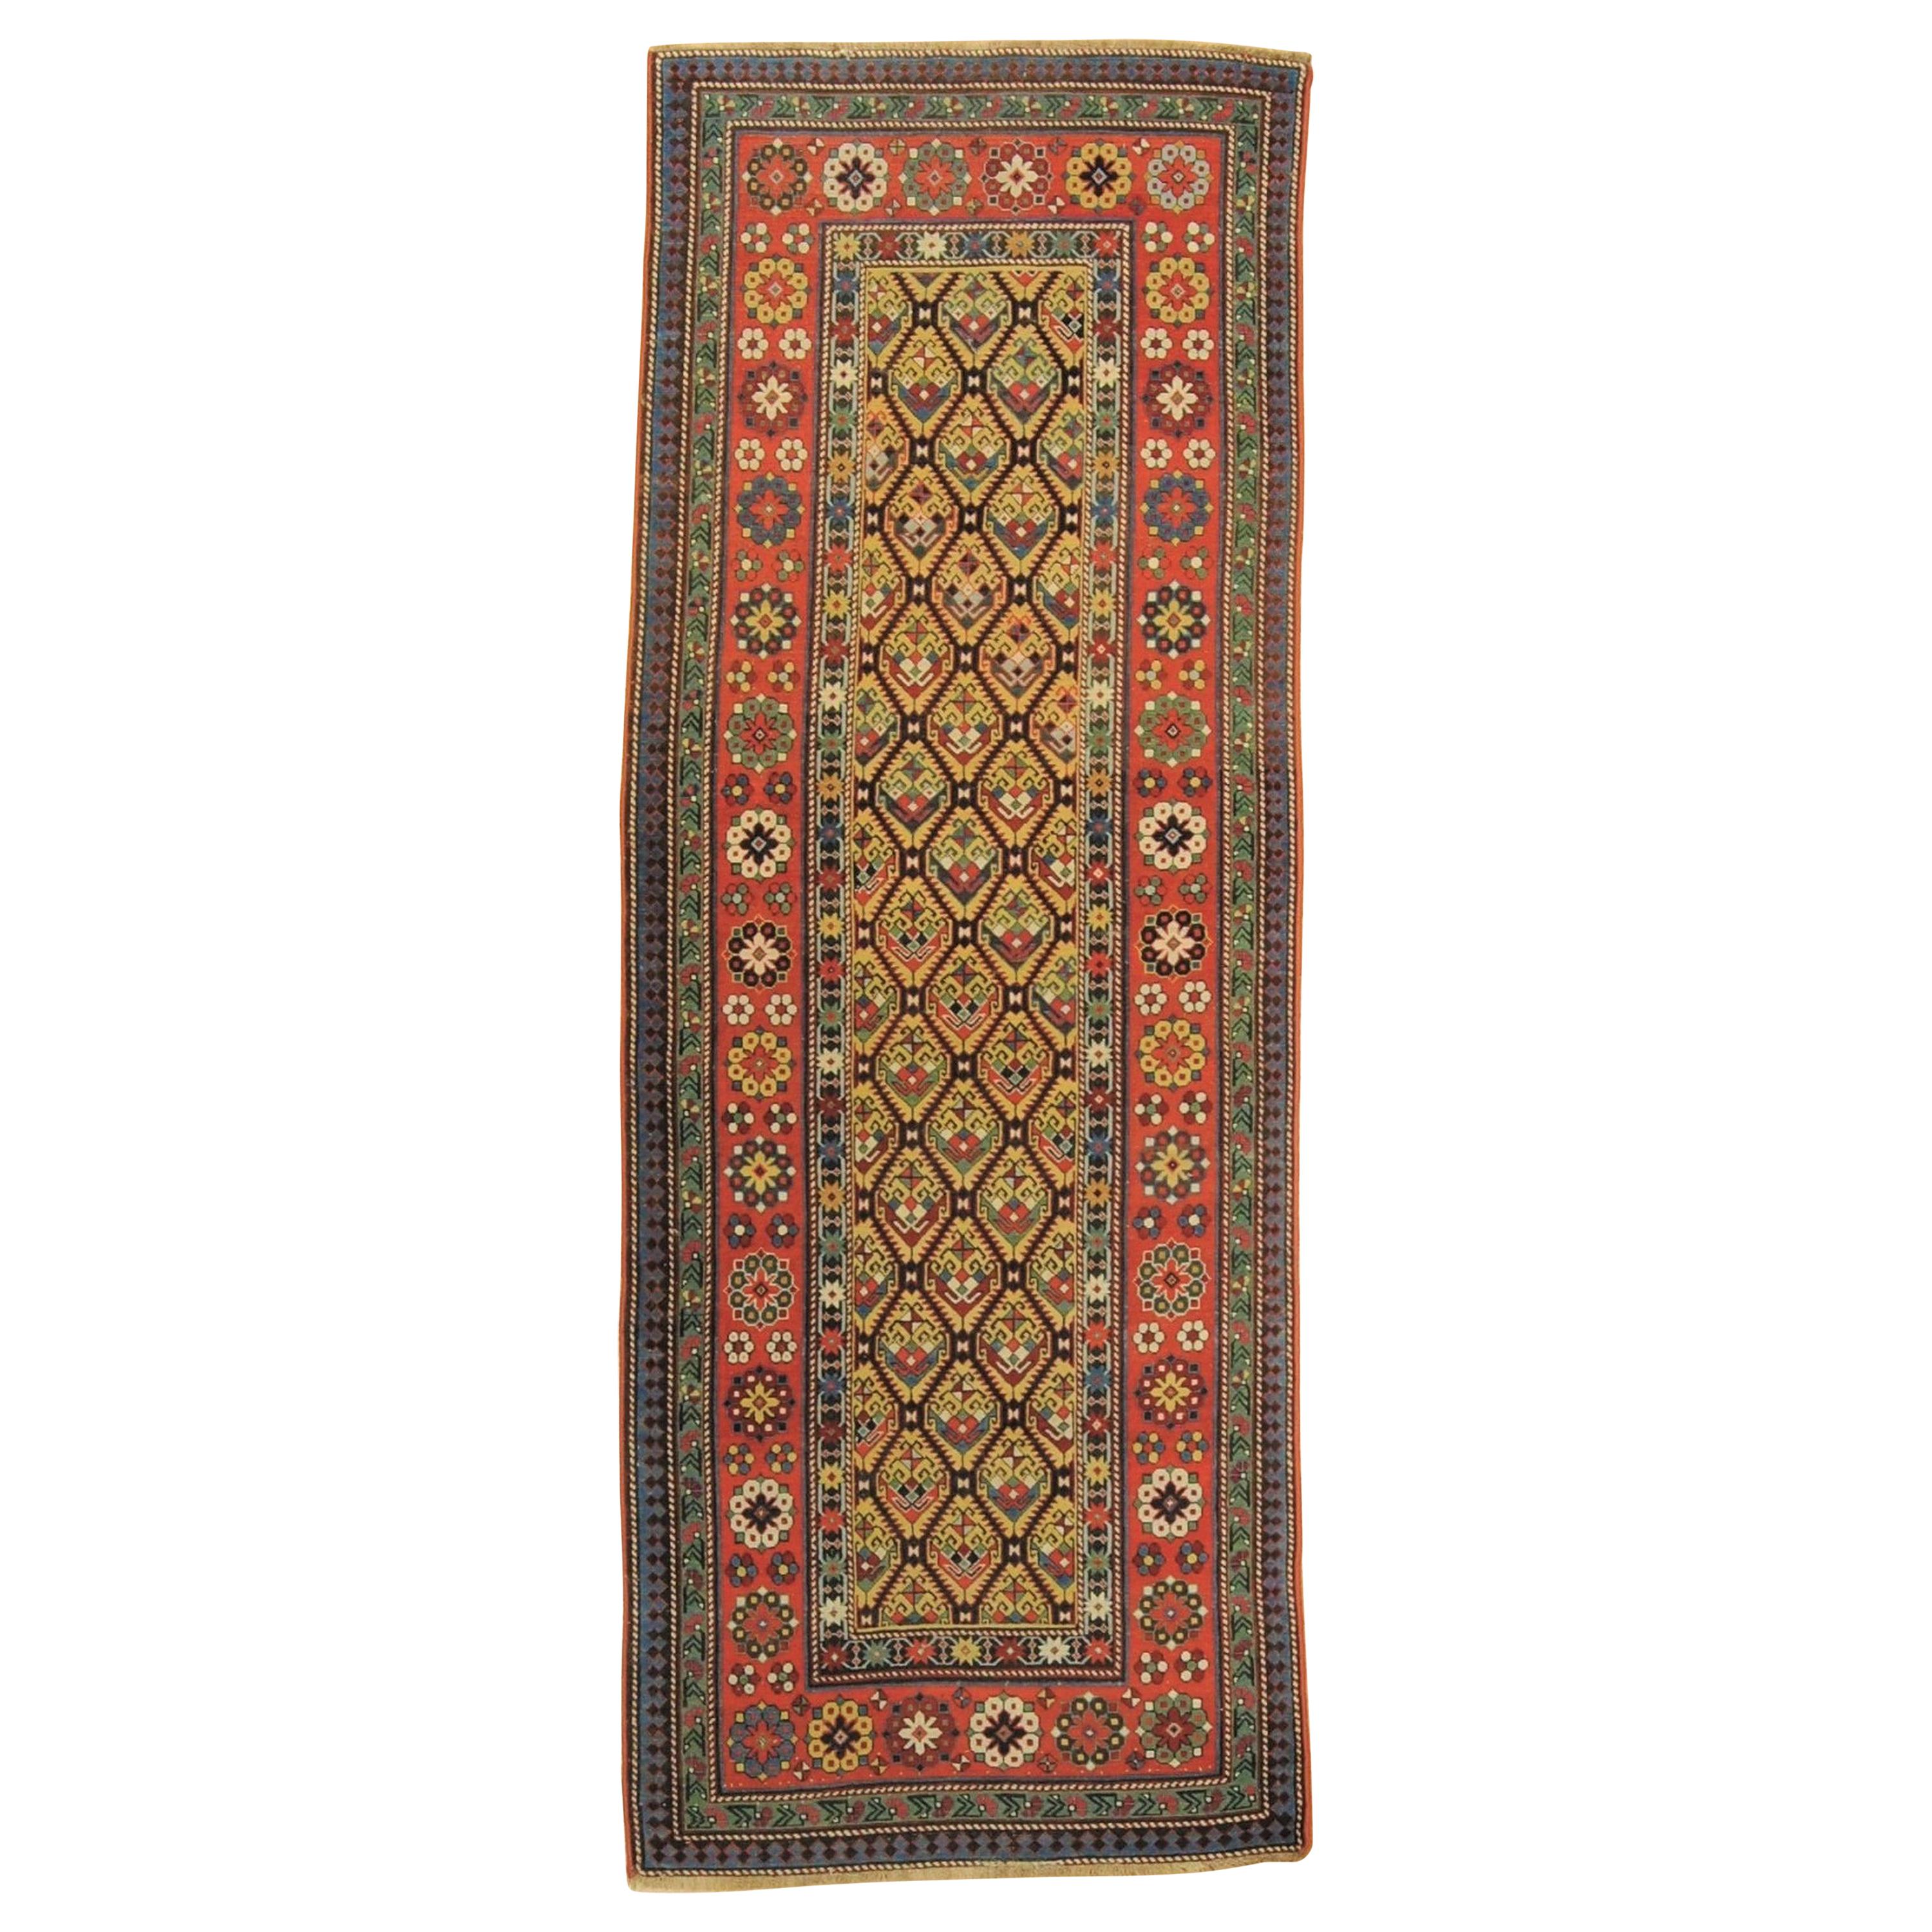 Gelb-grün-roter kaukasischer Talish-Teppich aus dem 19. Jahrhundert, 7500 Stück